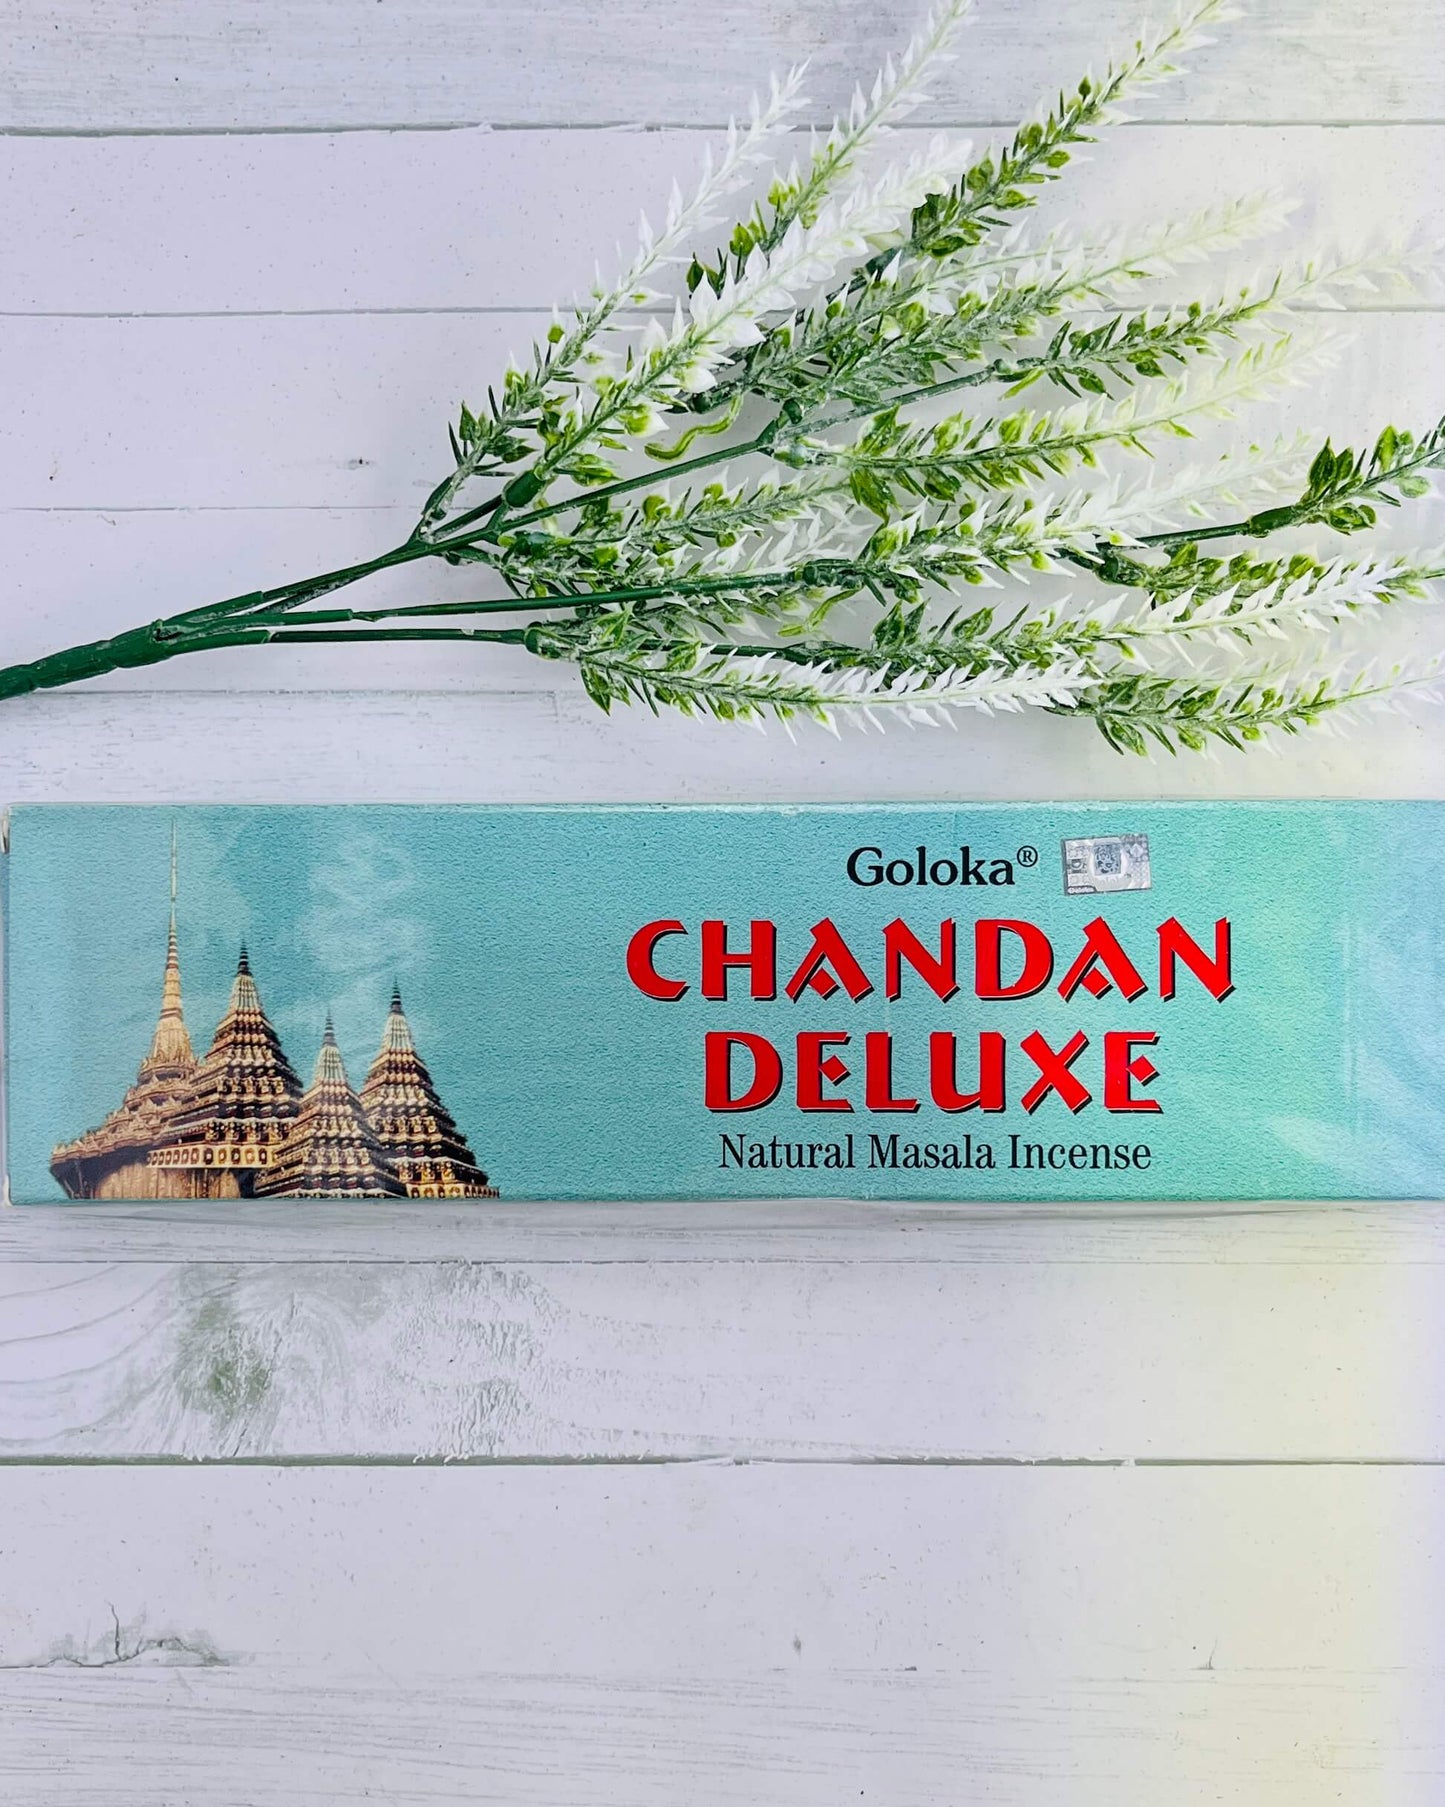 Goloka Chandan Deluxe 100g incense